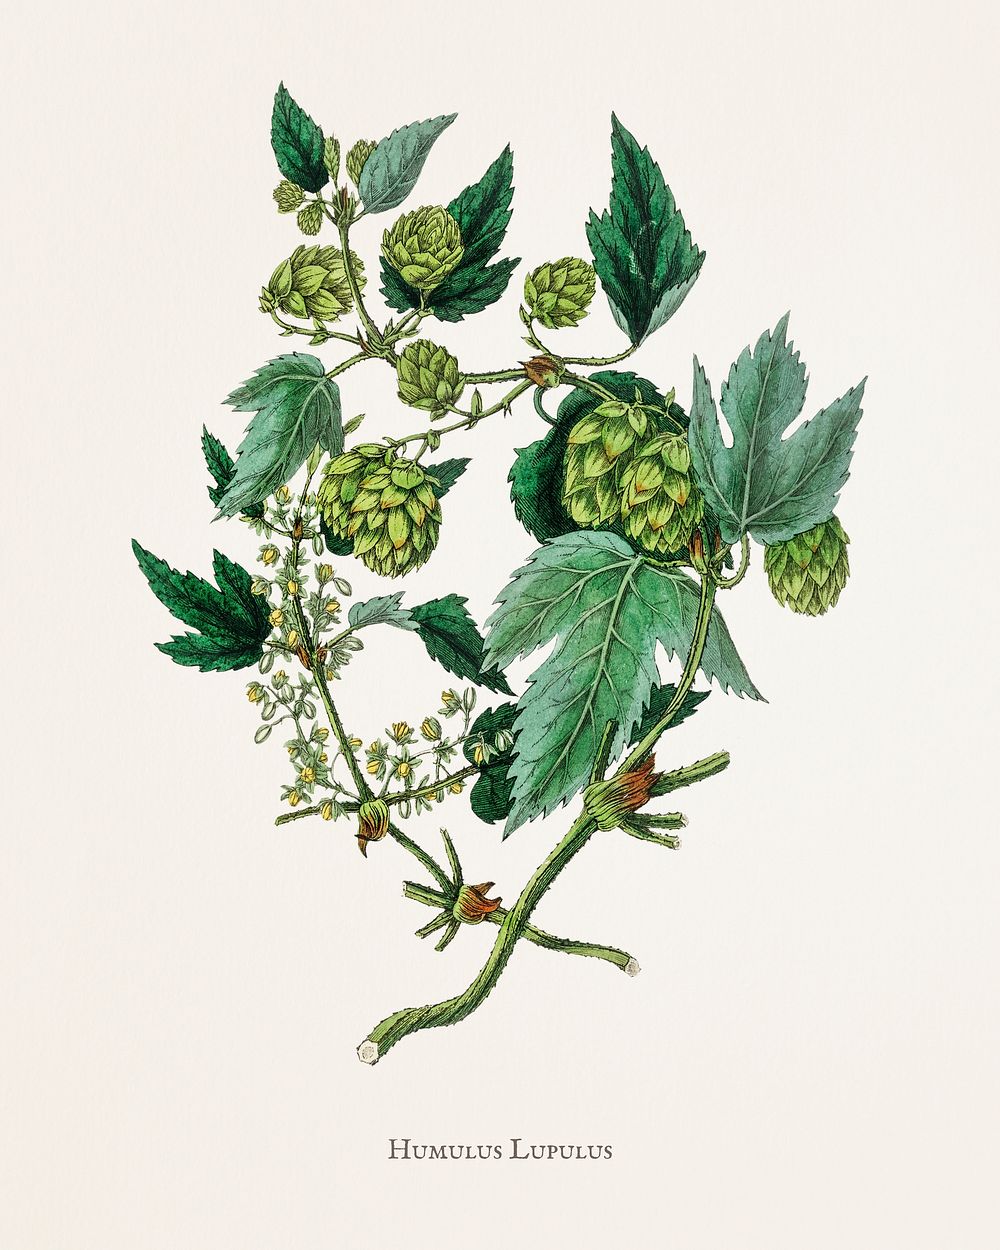 Hop (Humulus lupulus) illustration from Medical Botany (1836) by John Stephenson and James Morss Churchill.